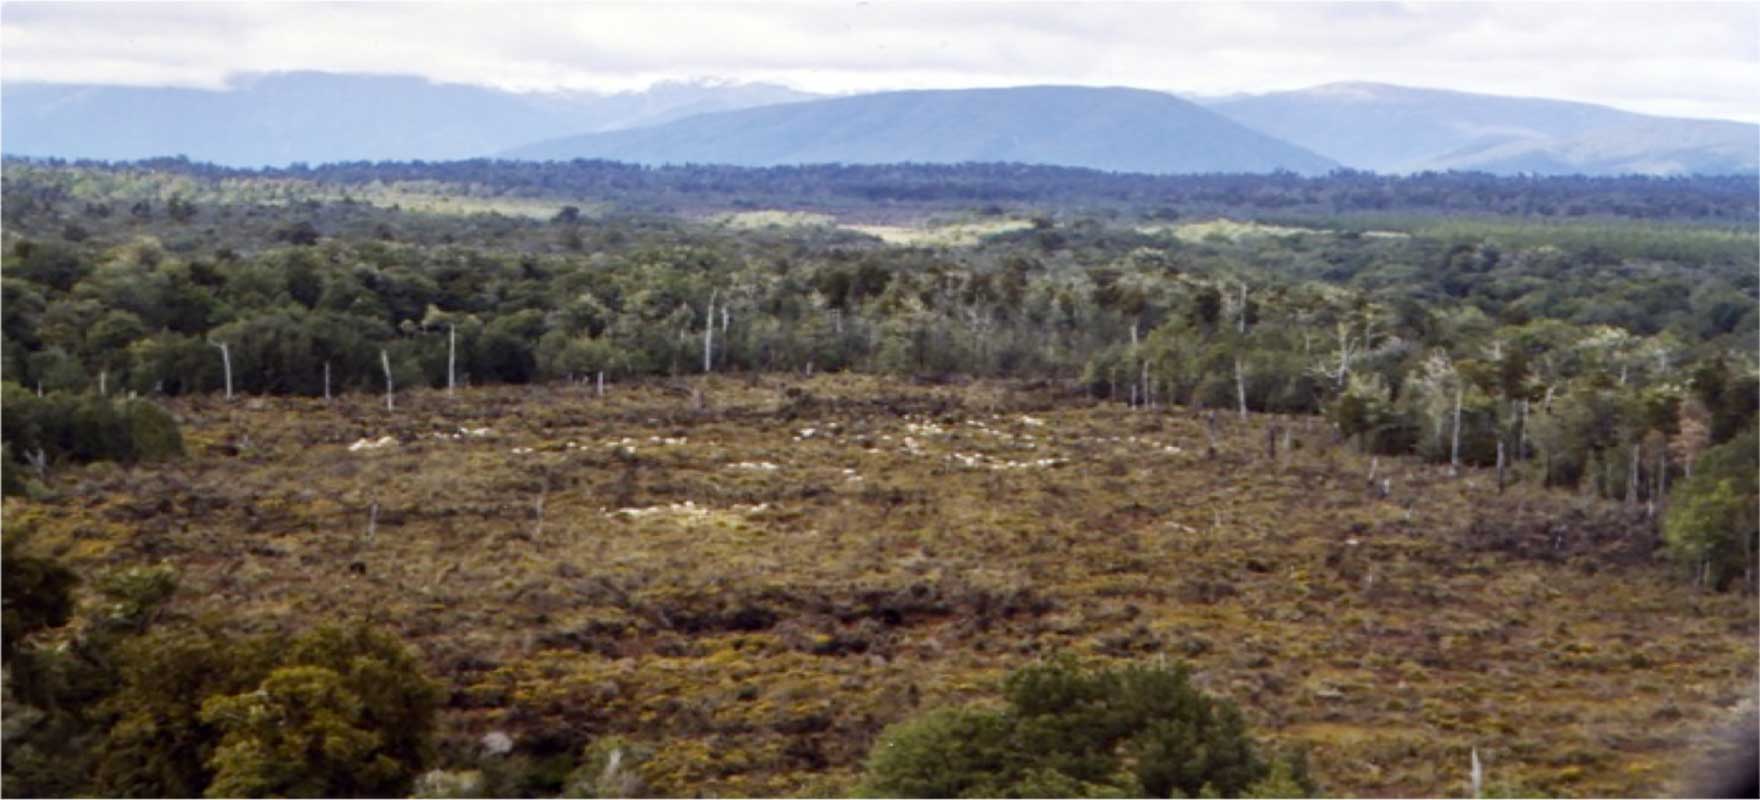 Moss bog in New Zealand